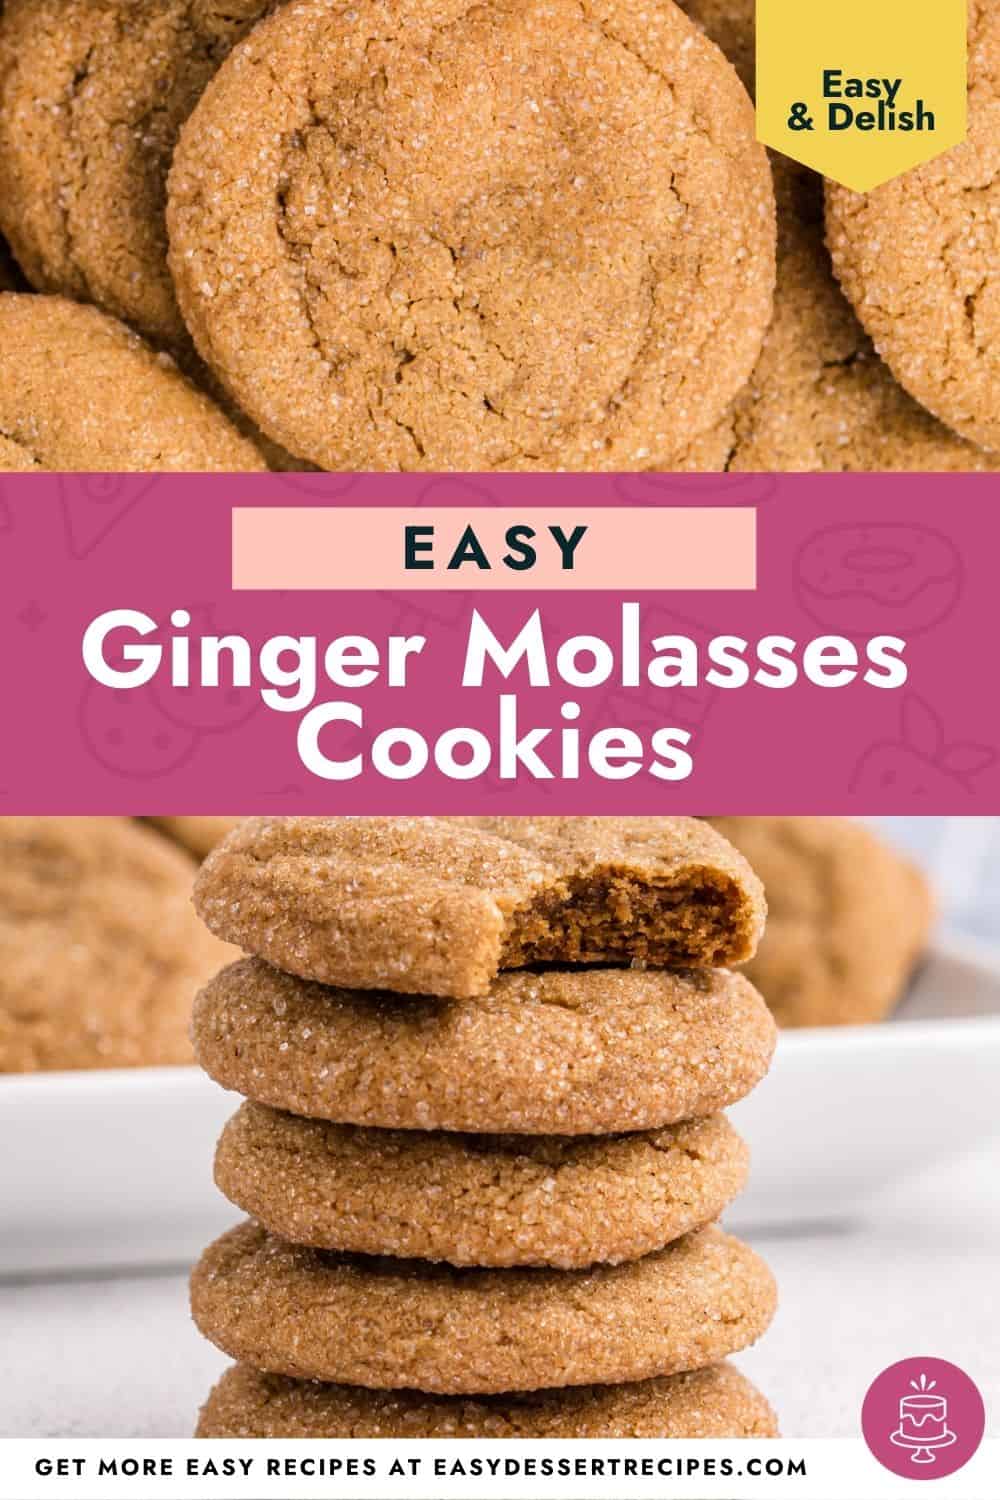 ginger molasses cookies pinterest.